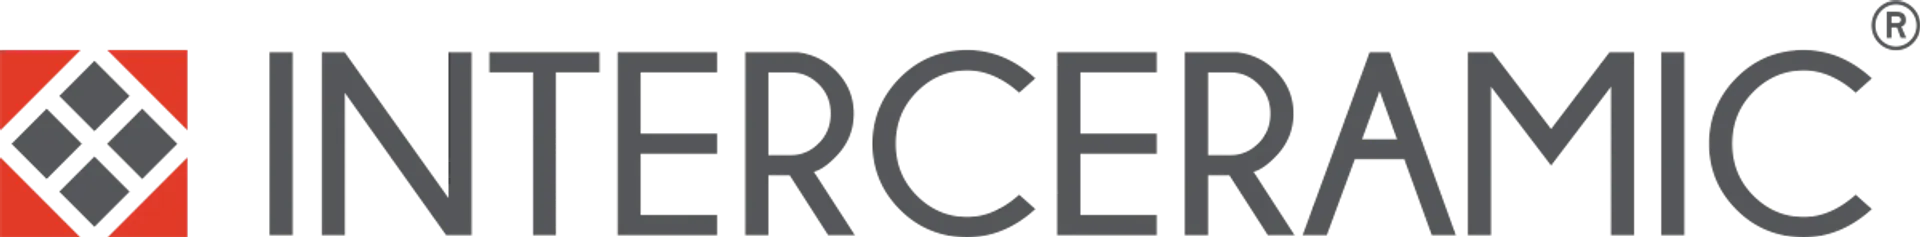 INTERCERAMIC logo